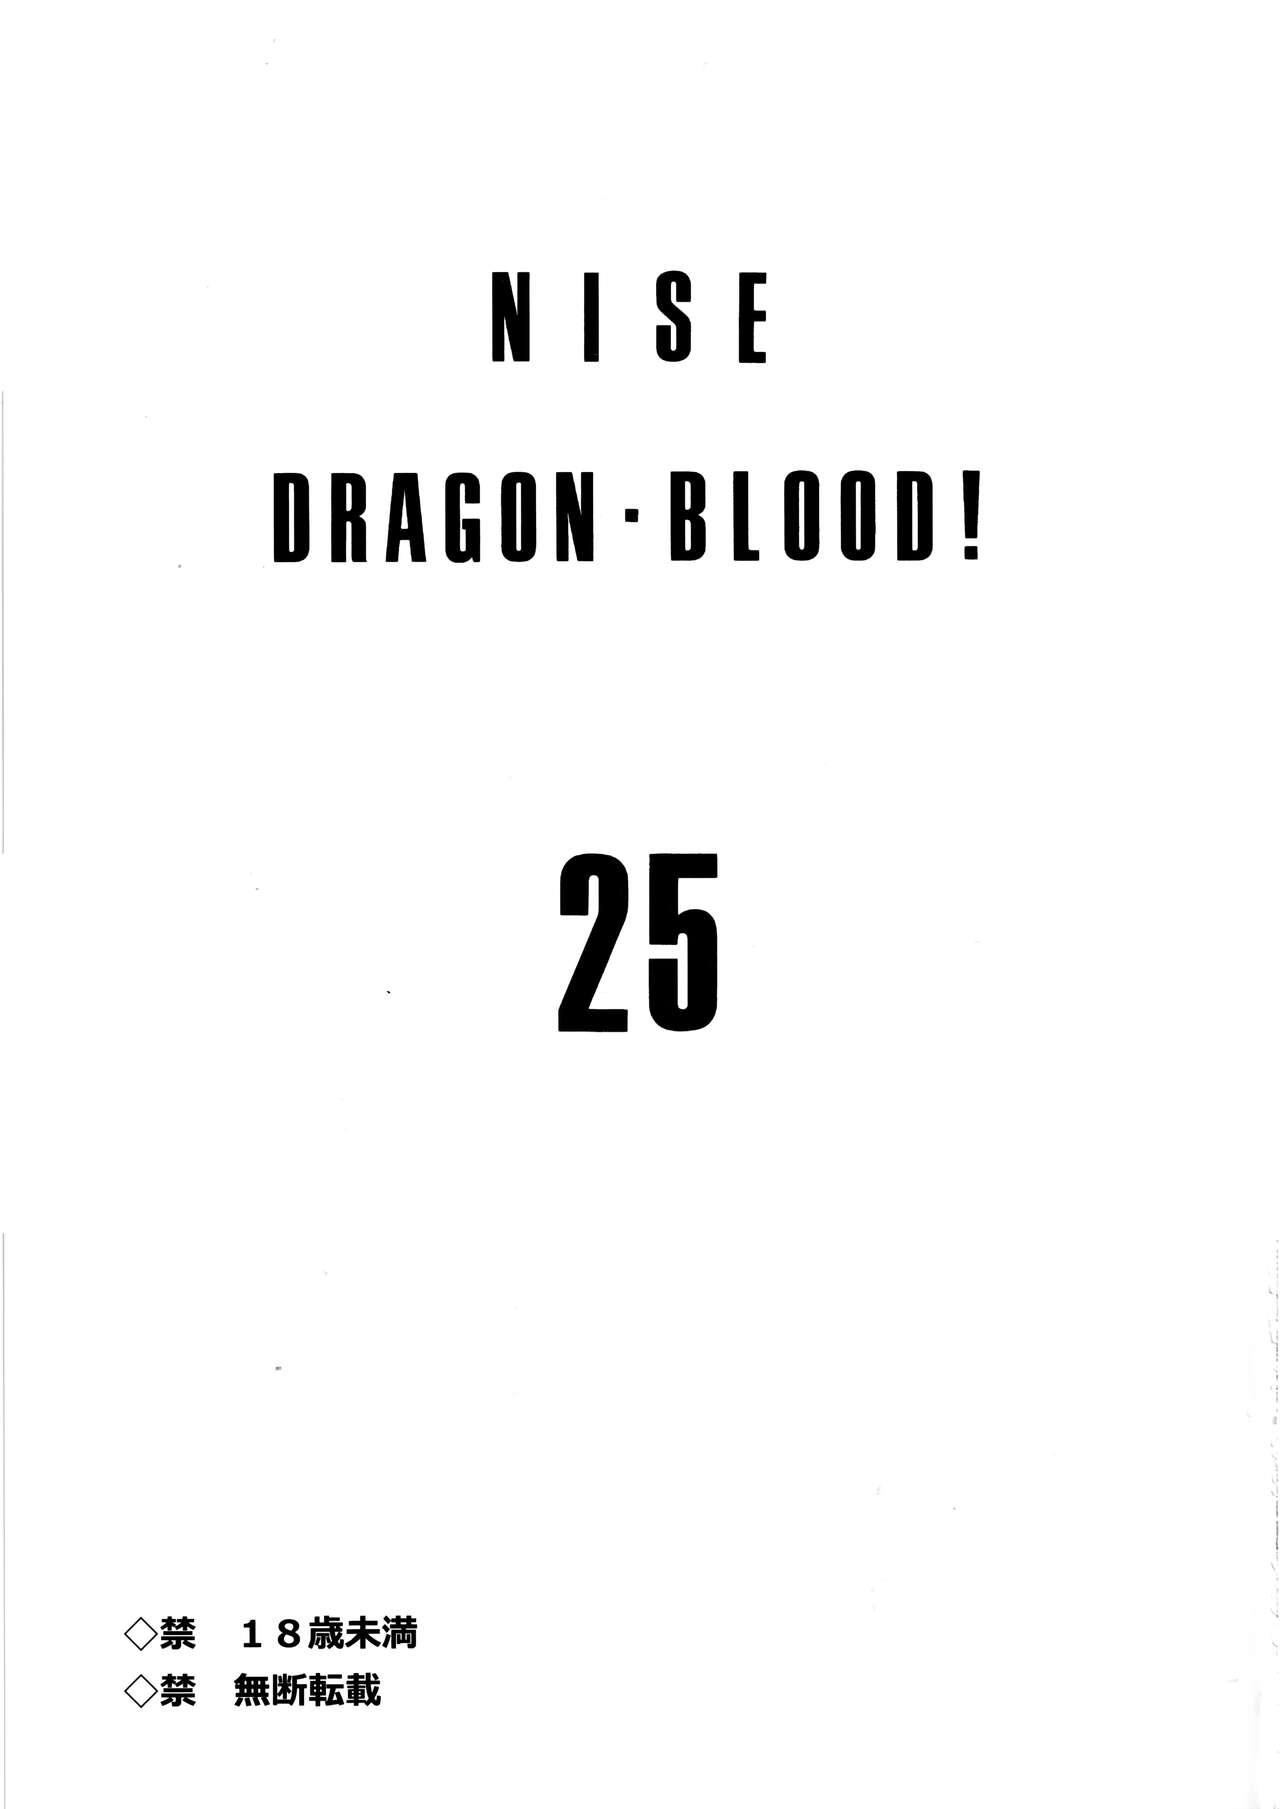 NISE Dragon Blood! 25 1